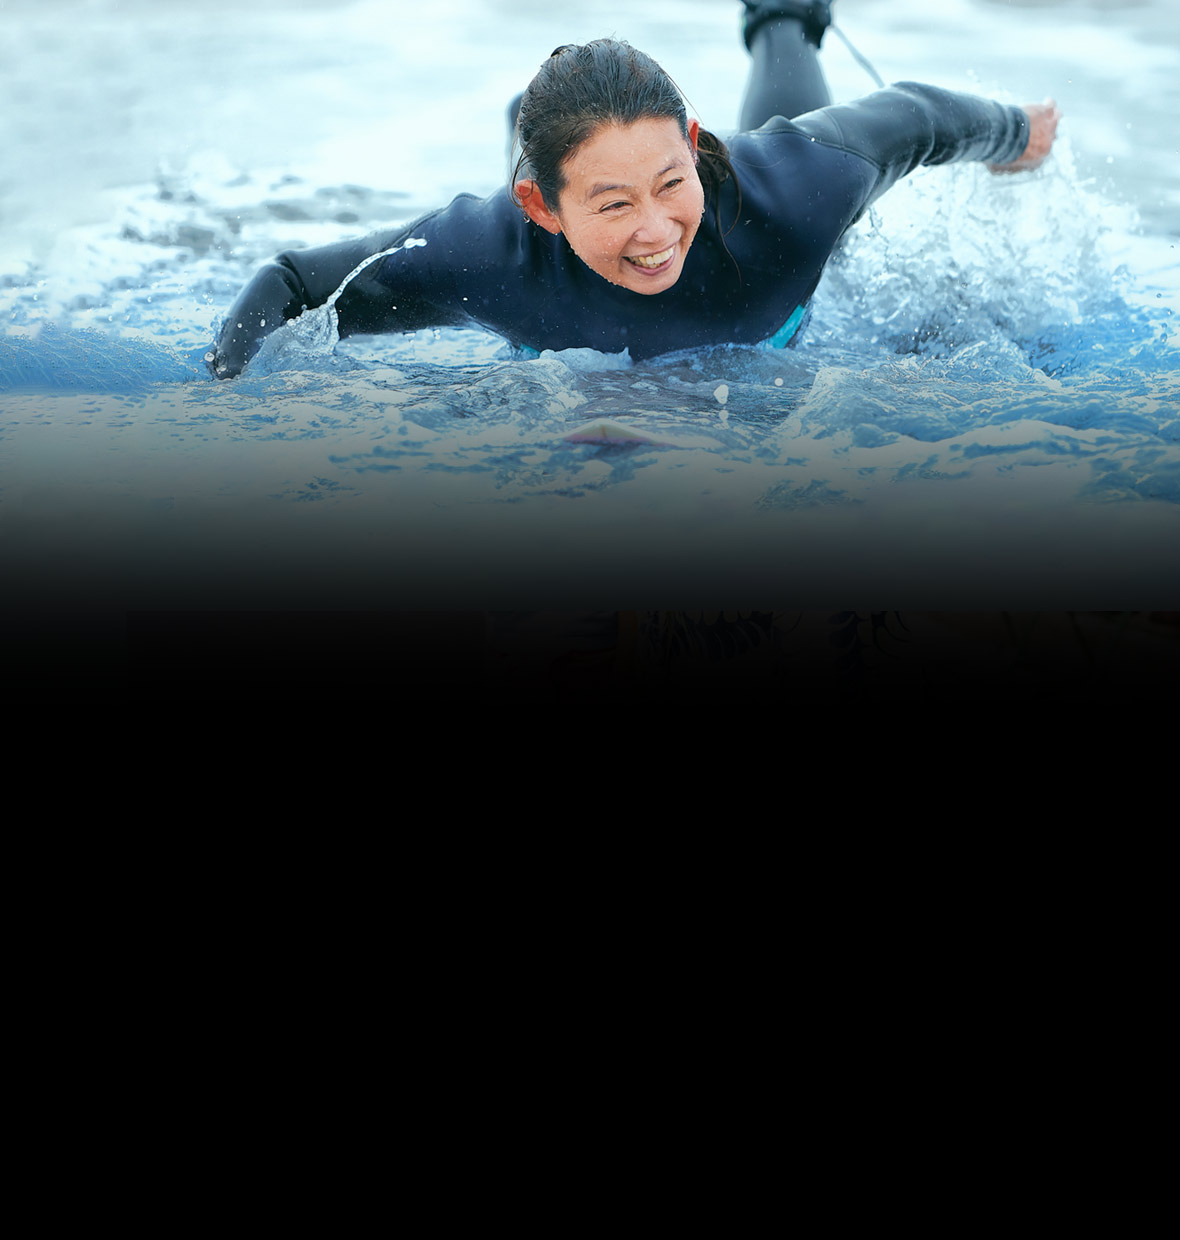 Asian woman surfing in Australia